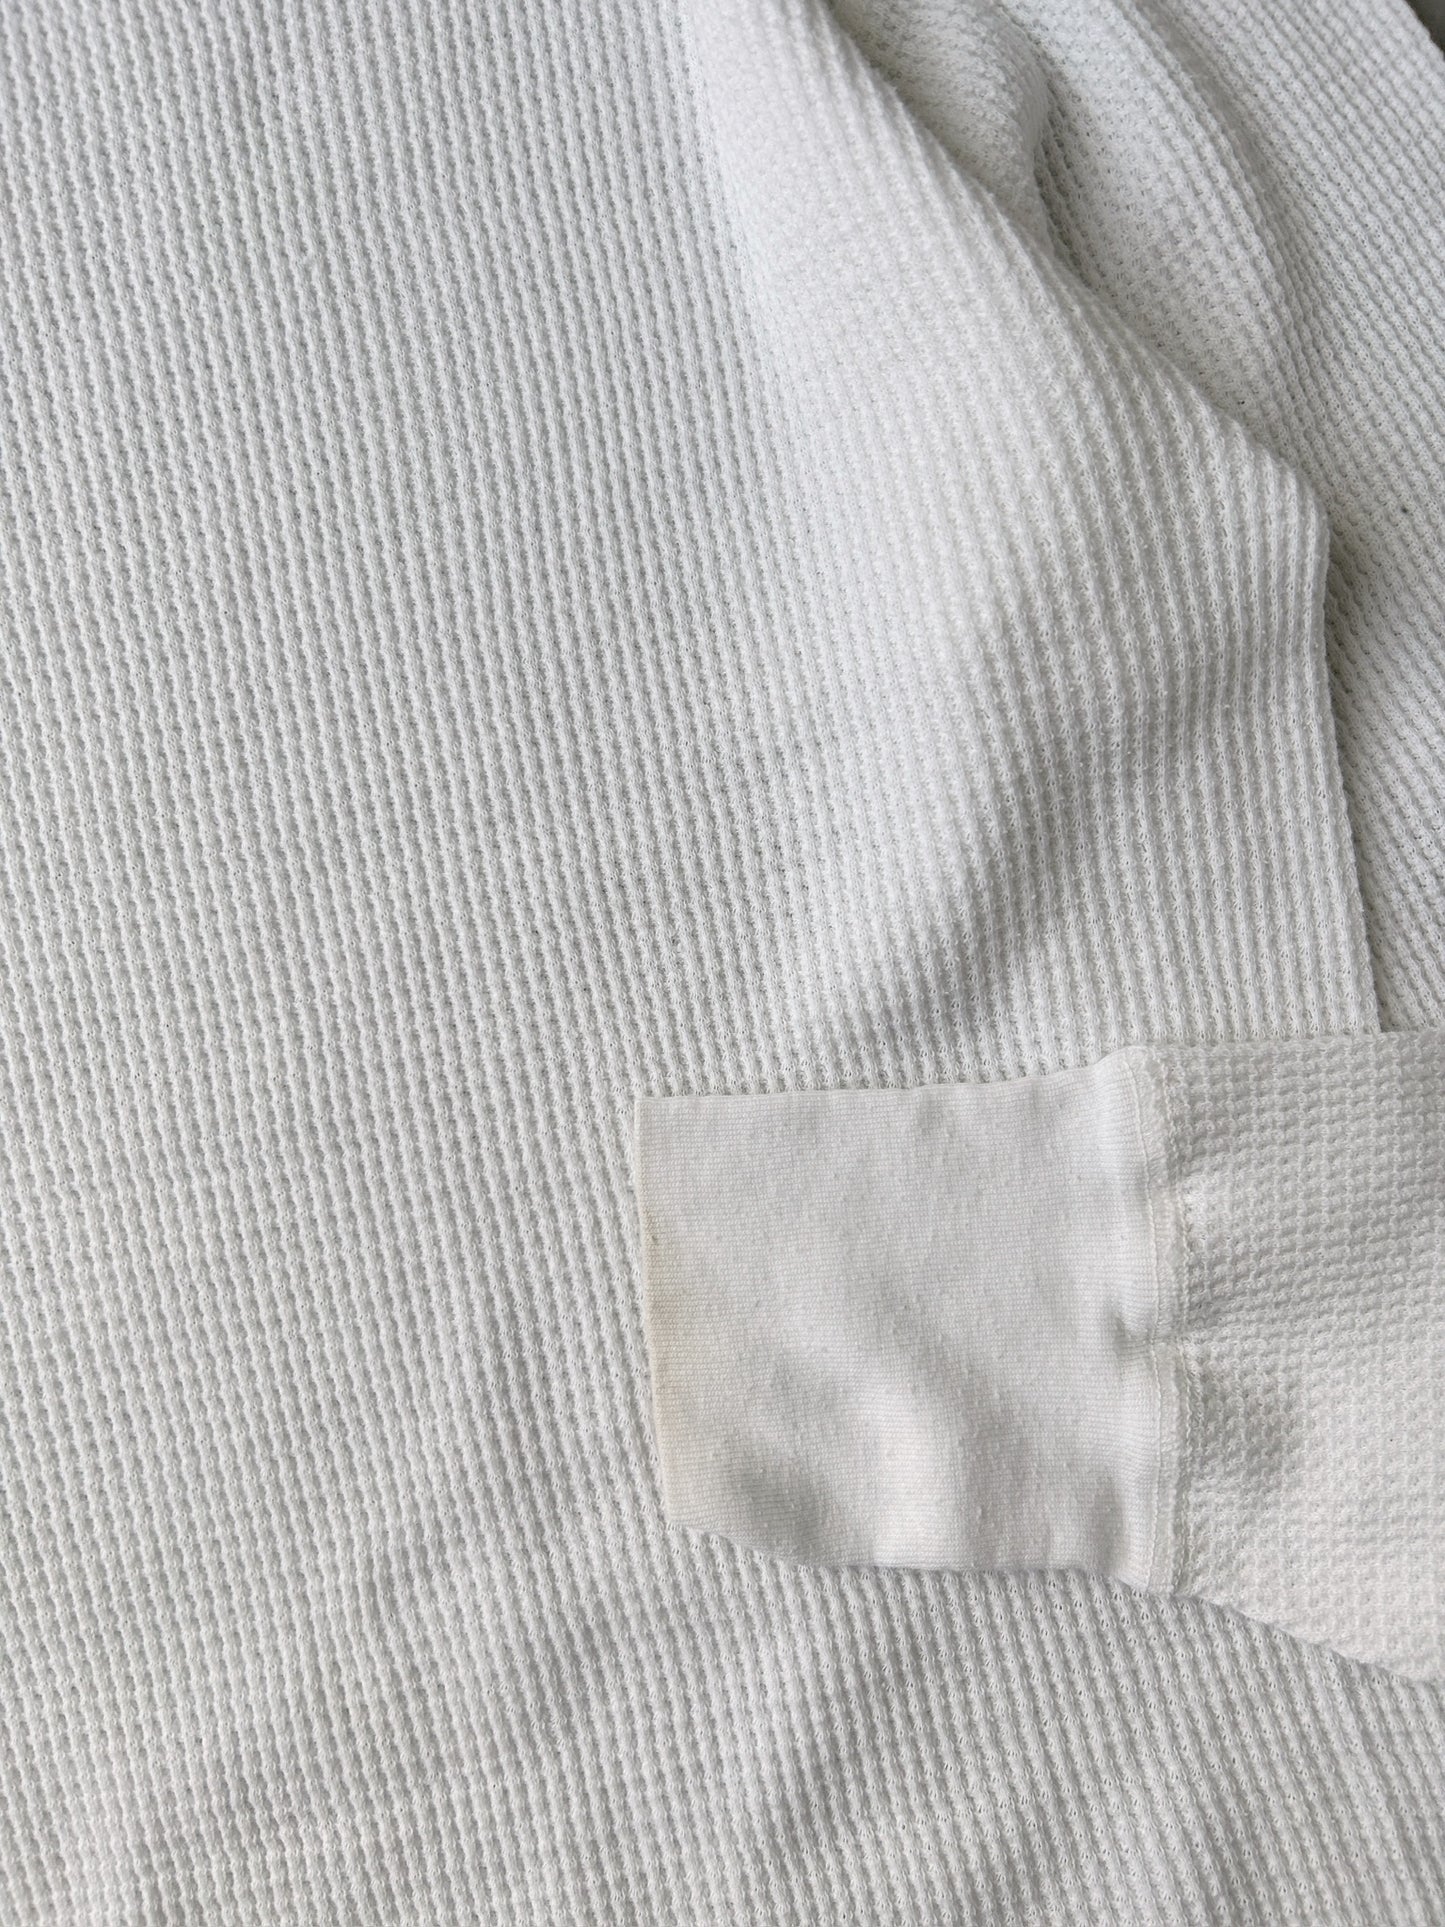 White Thermal Shirt 70's - Large